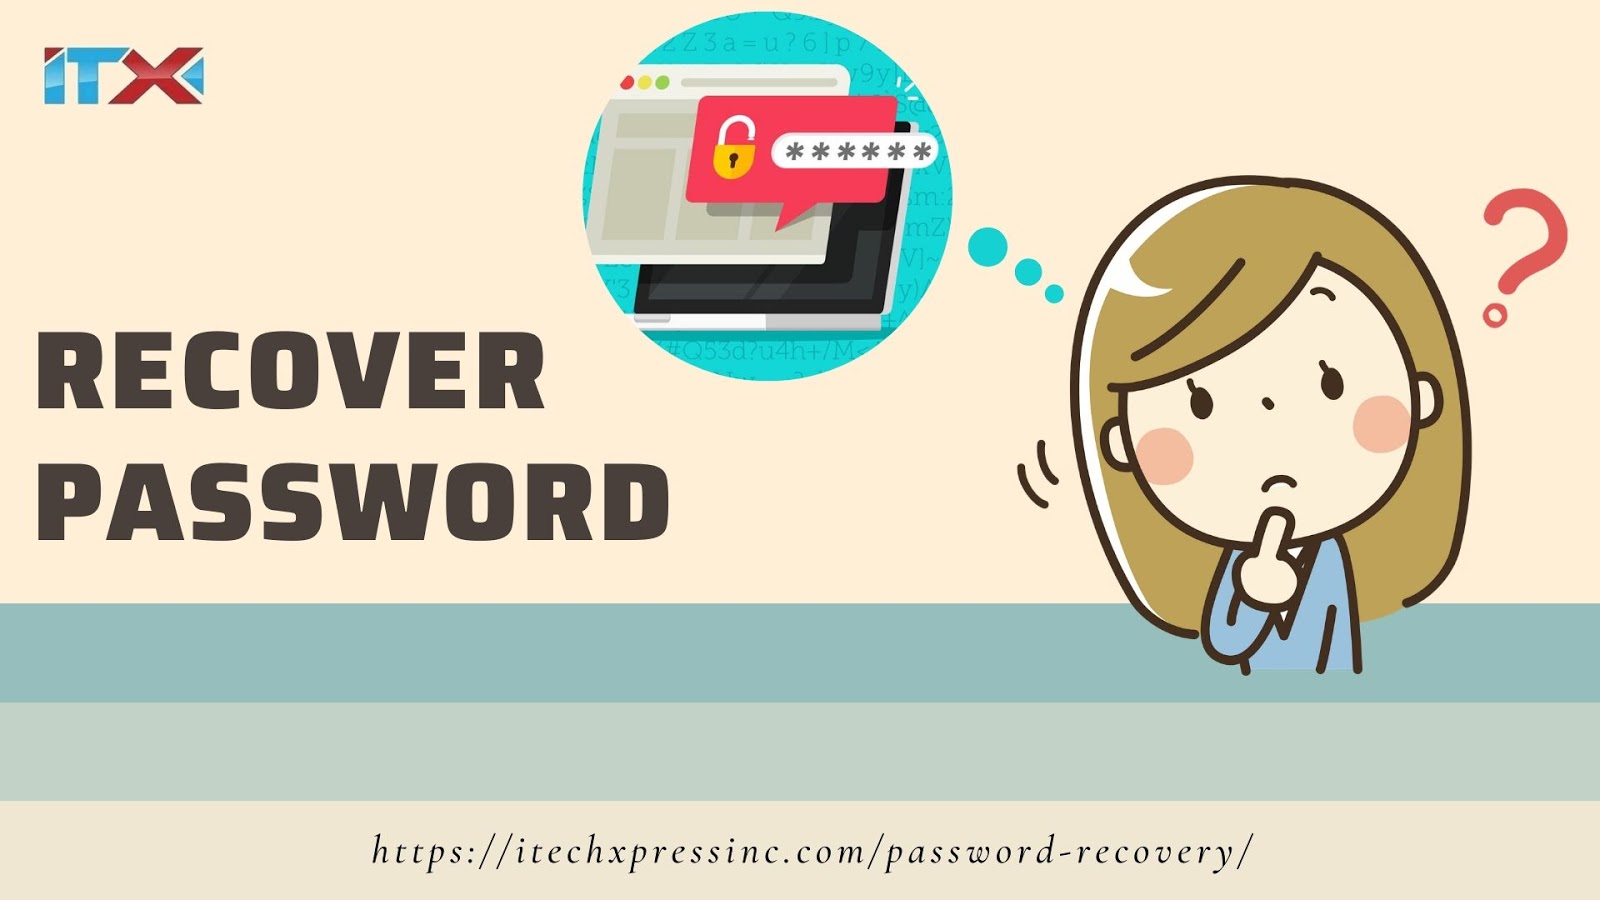 Recover Password Covina